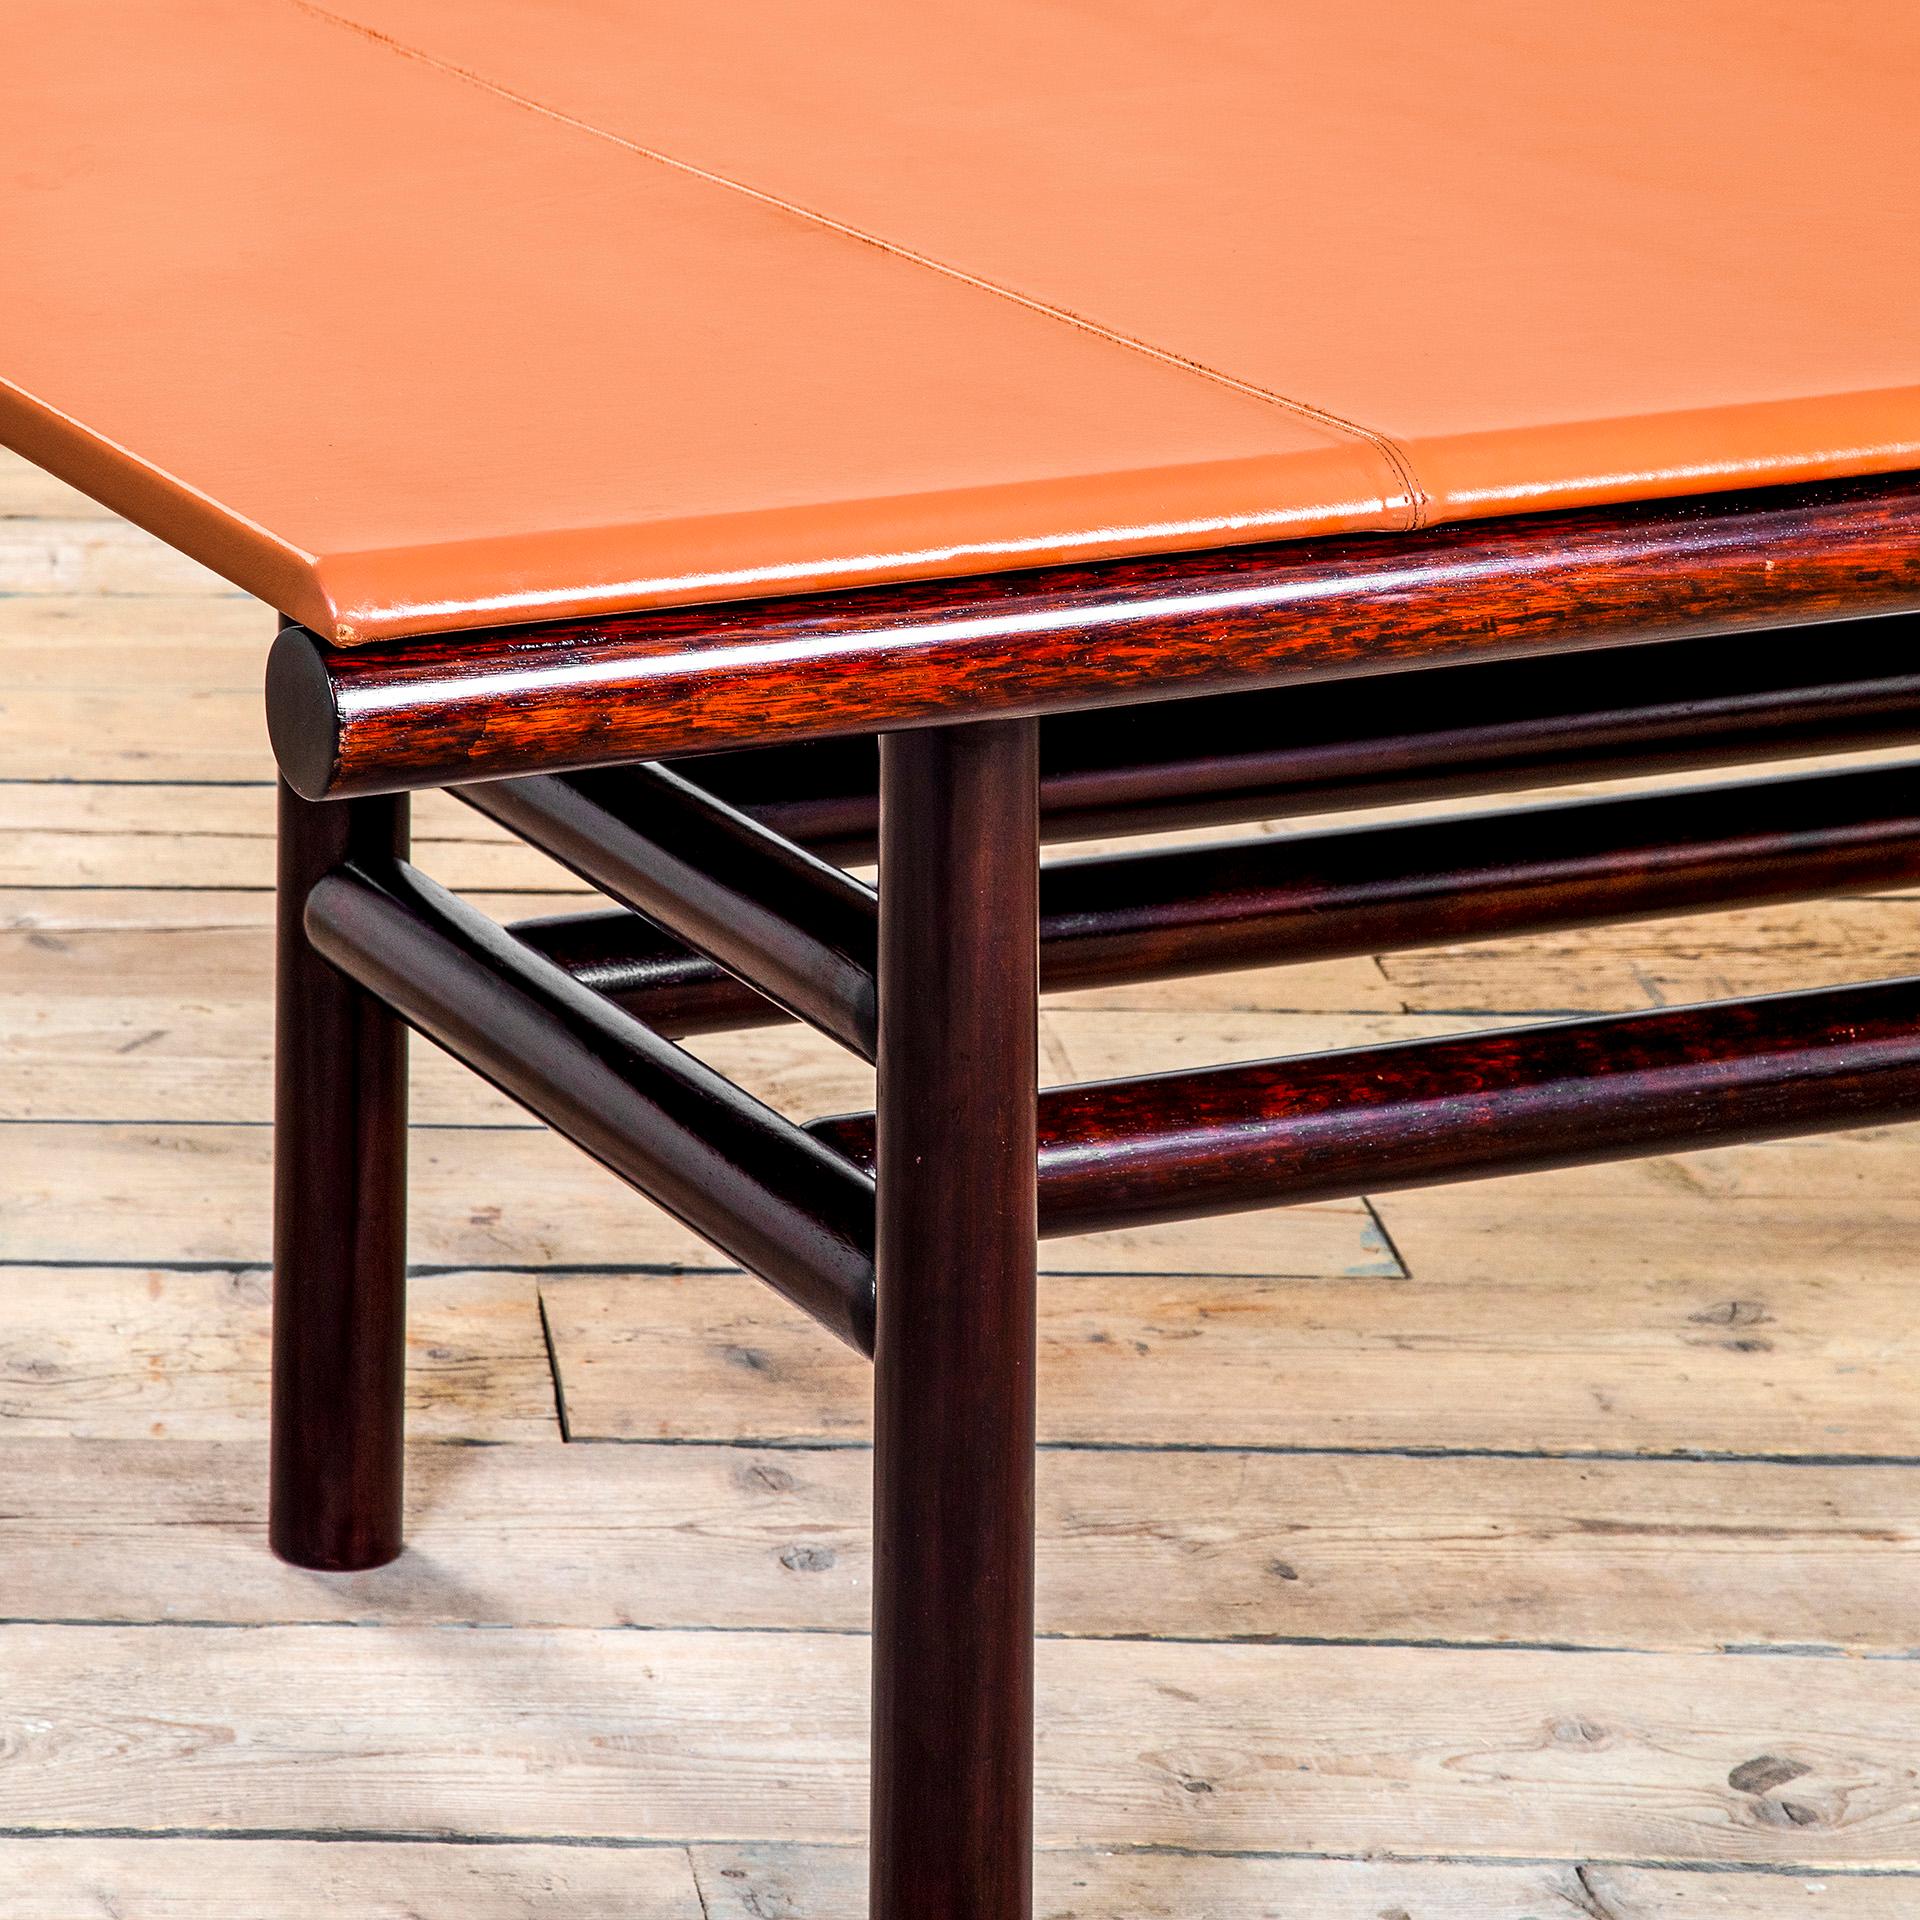 Italian 20th Century Carlo Scarpa Table Mod. Gritti Wood and Leather, '70